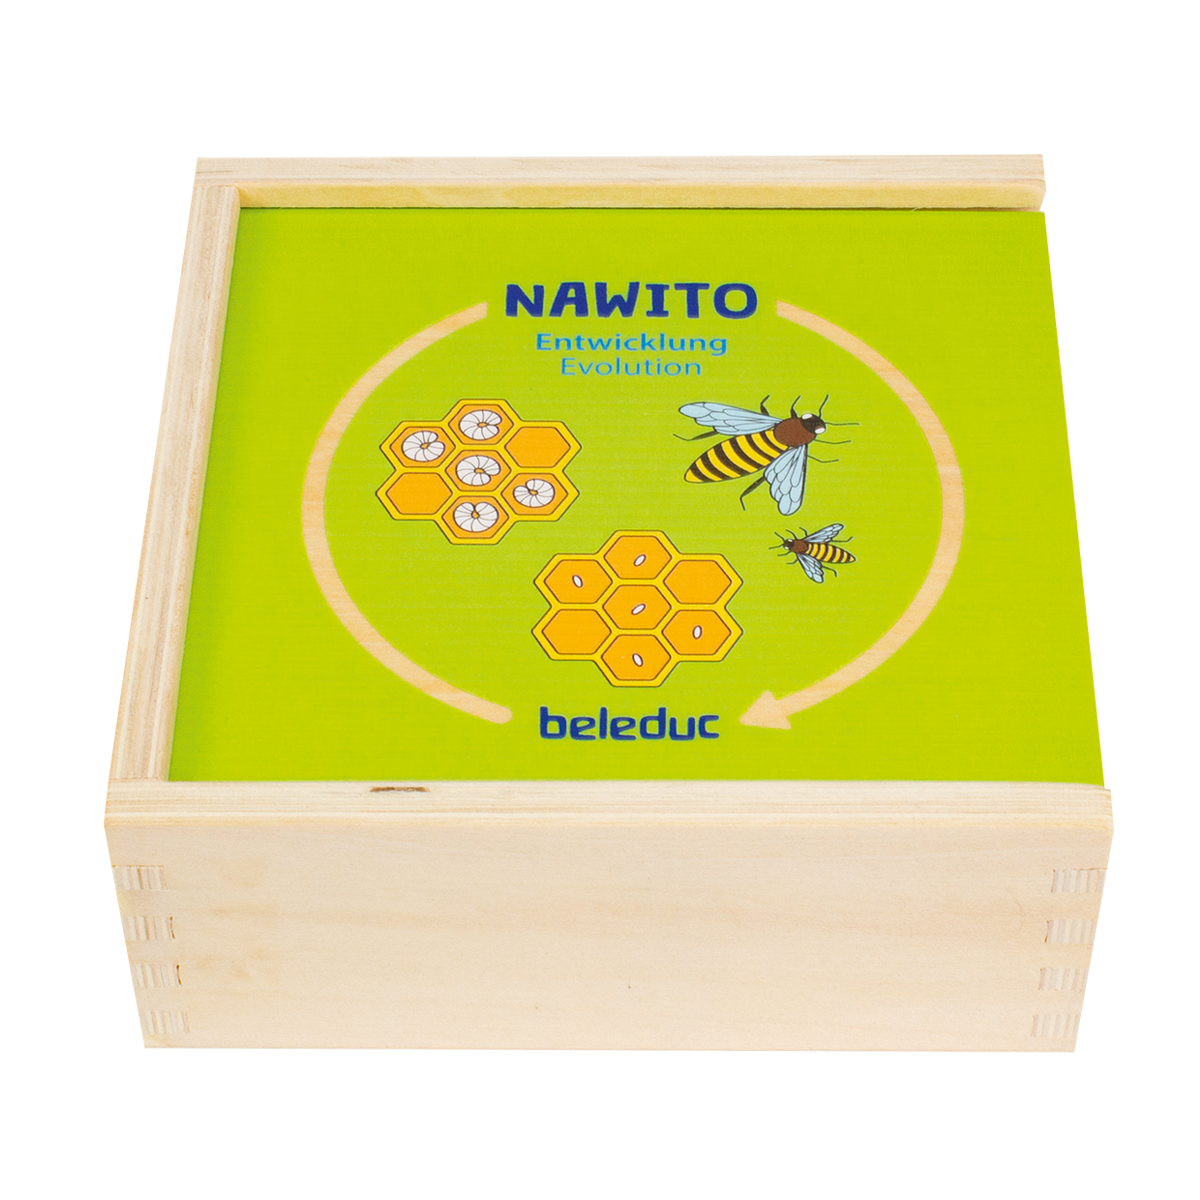 Beleduc Nawito Evolution Matching Puzzle 自然生長過程配對拼圖